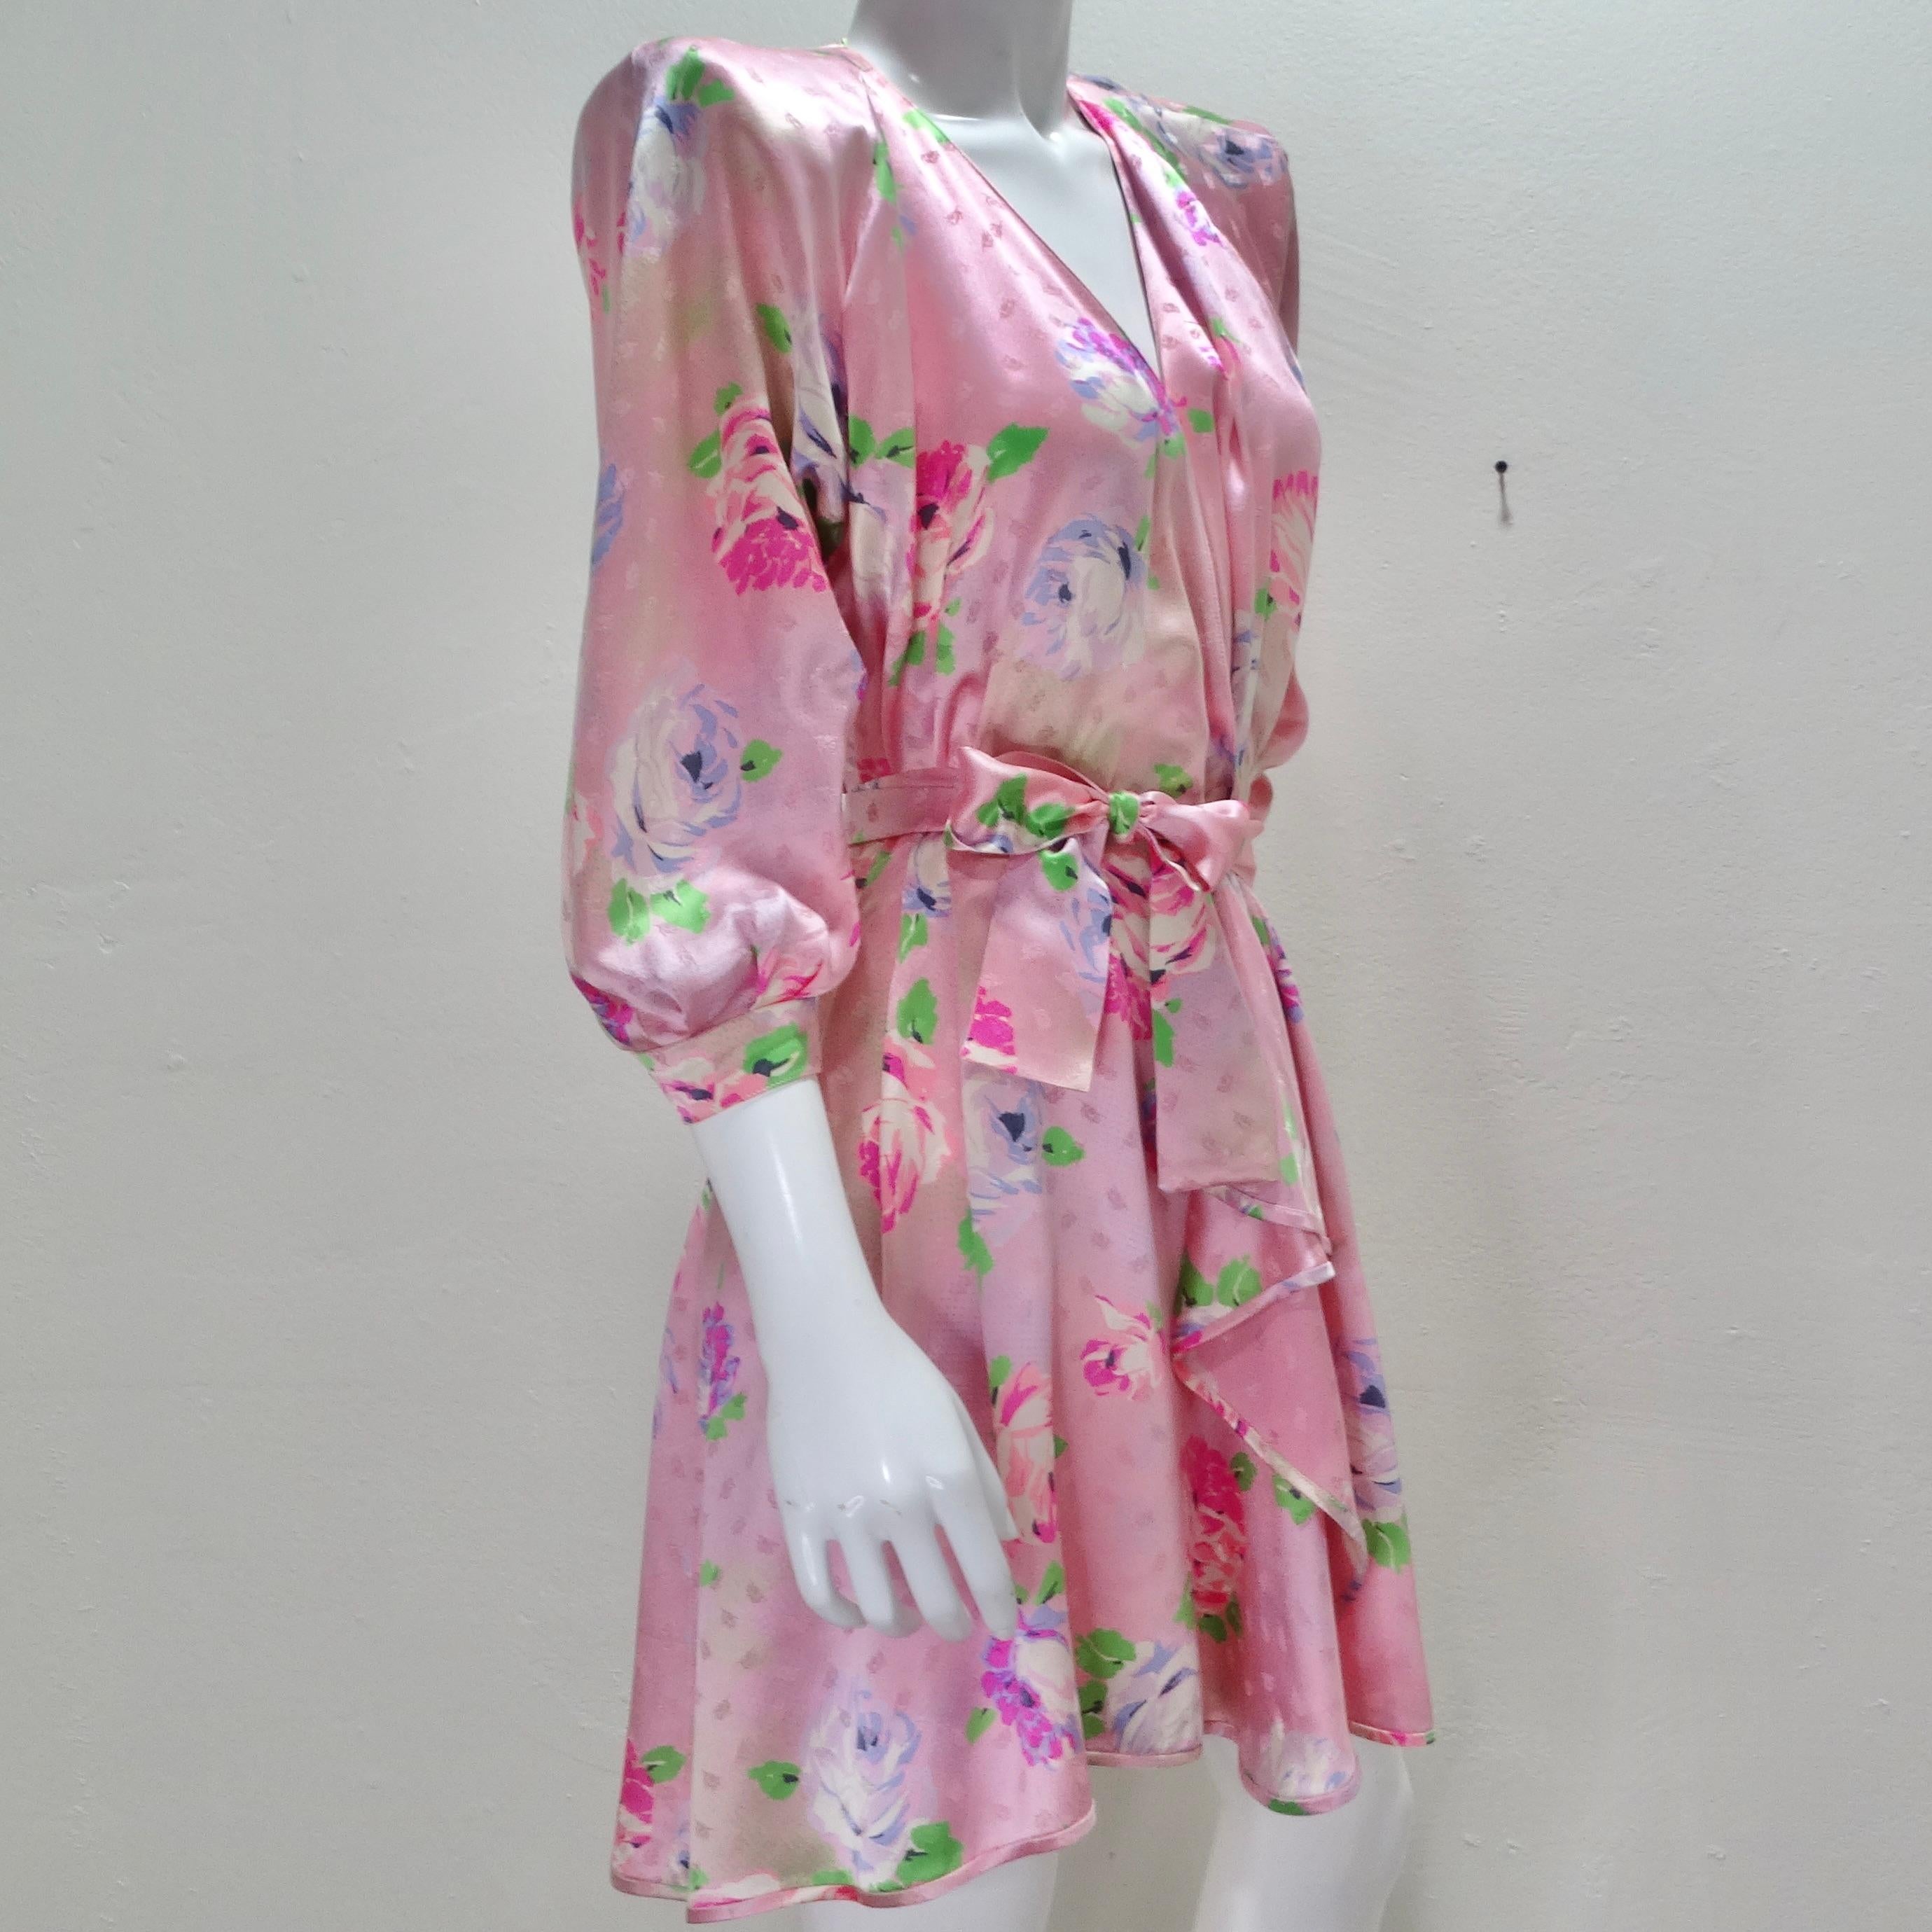 Emanuel Ungaro 1980s Pink Floral Wrap Dress In Excellent Condition For Sale In Scottsdale, AZ